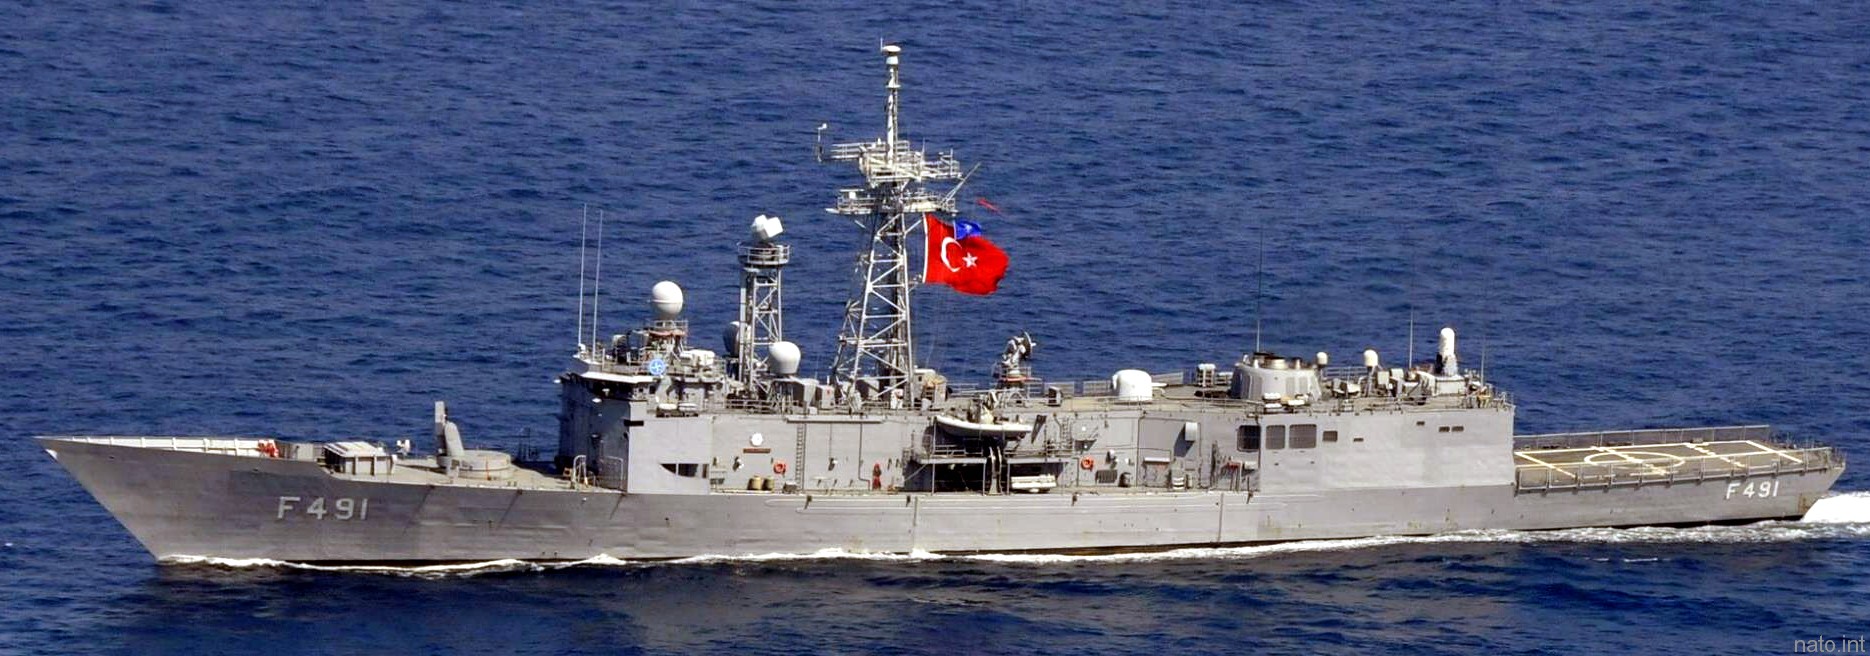 f-491 tcg giresun gabya g-class perry frigate ffg turkish navy türk deniz kuvvetleri 02